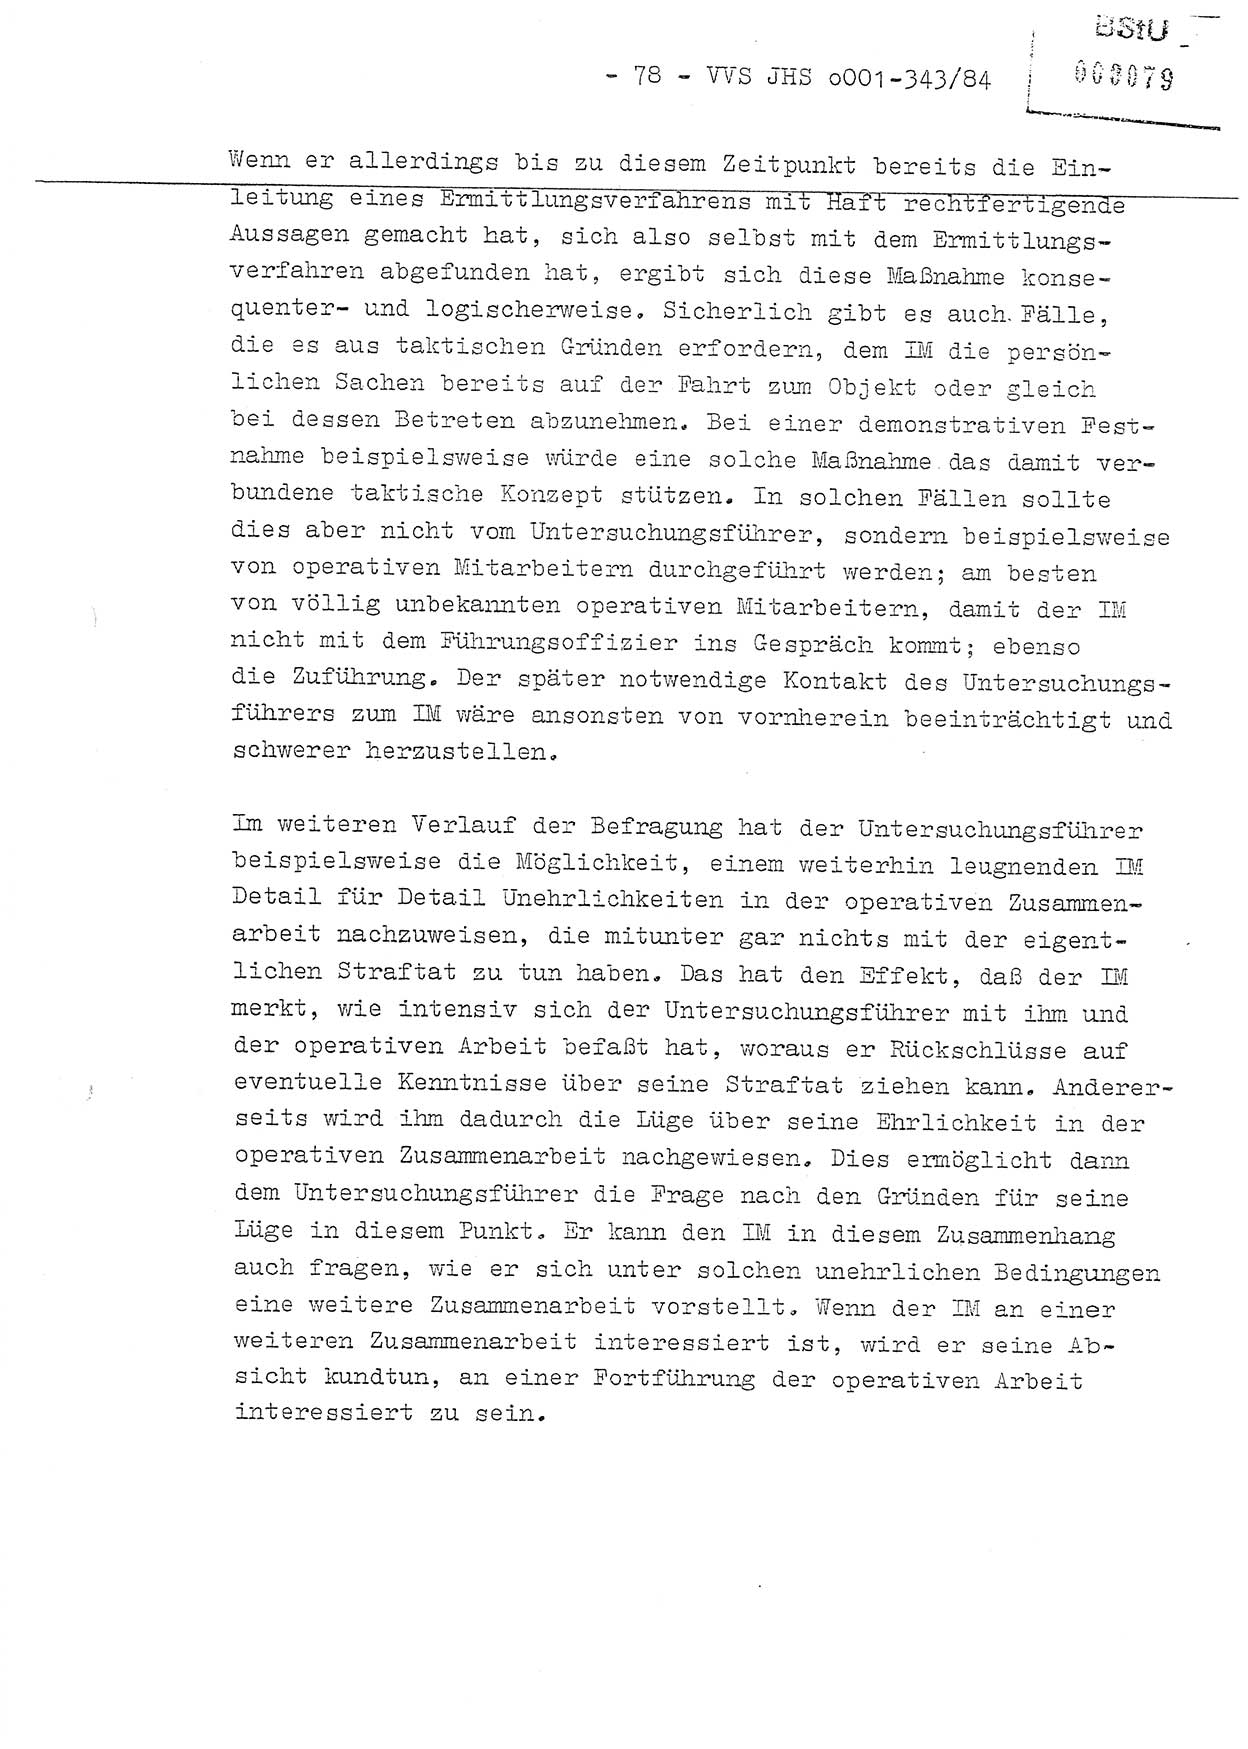 Diplomarbeit, Oberleutnant Bernd Michael (HA Ⅸ/5), Oberleutnant Peter Felber (HA IX/5), Ministerium für Staatssicherheit (MfS) [Deutsche Demokratische Republik (DDR)], Juristische Hochschule (JHS), Vertrauliche Verschlußsache (VVS) o001-343/84, Potsdam 1985, Seite 78 (Dipl.-Arb. MfS DDR JHS VVS o001-343/84 1985, S. 78)